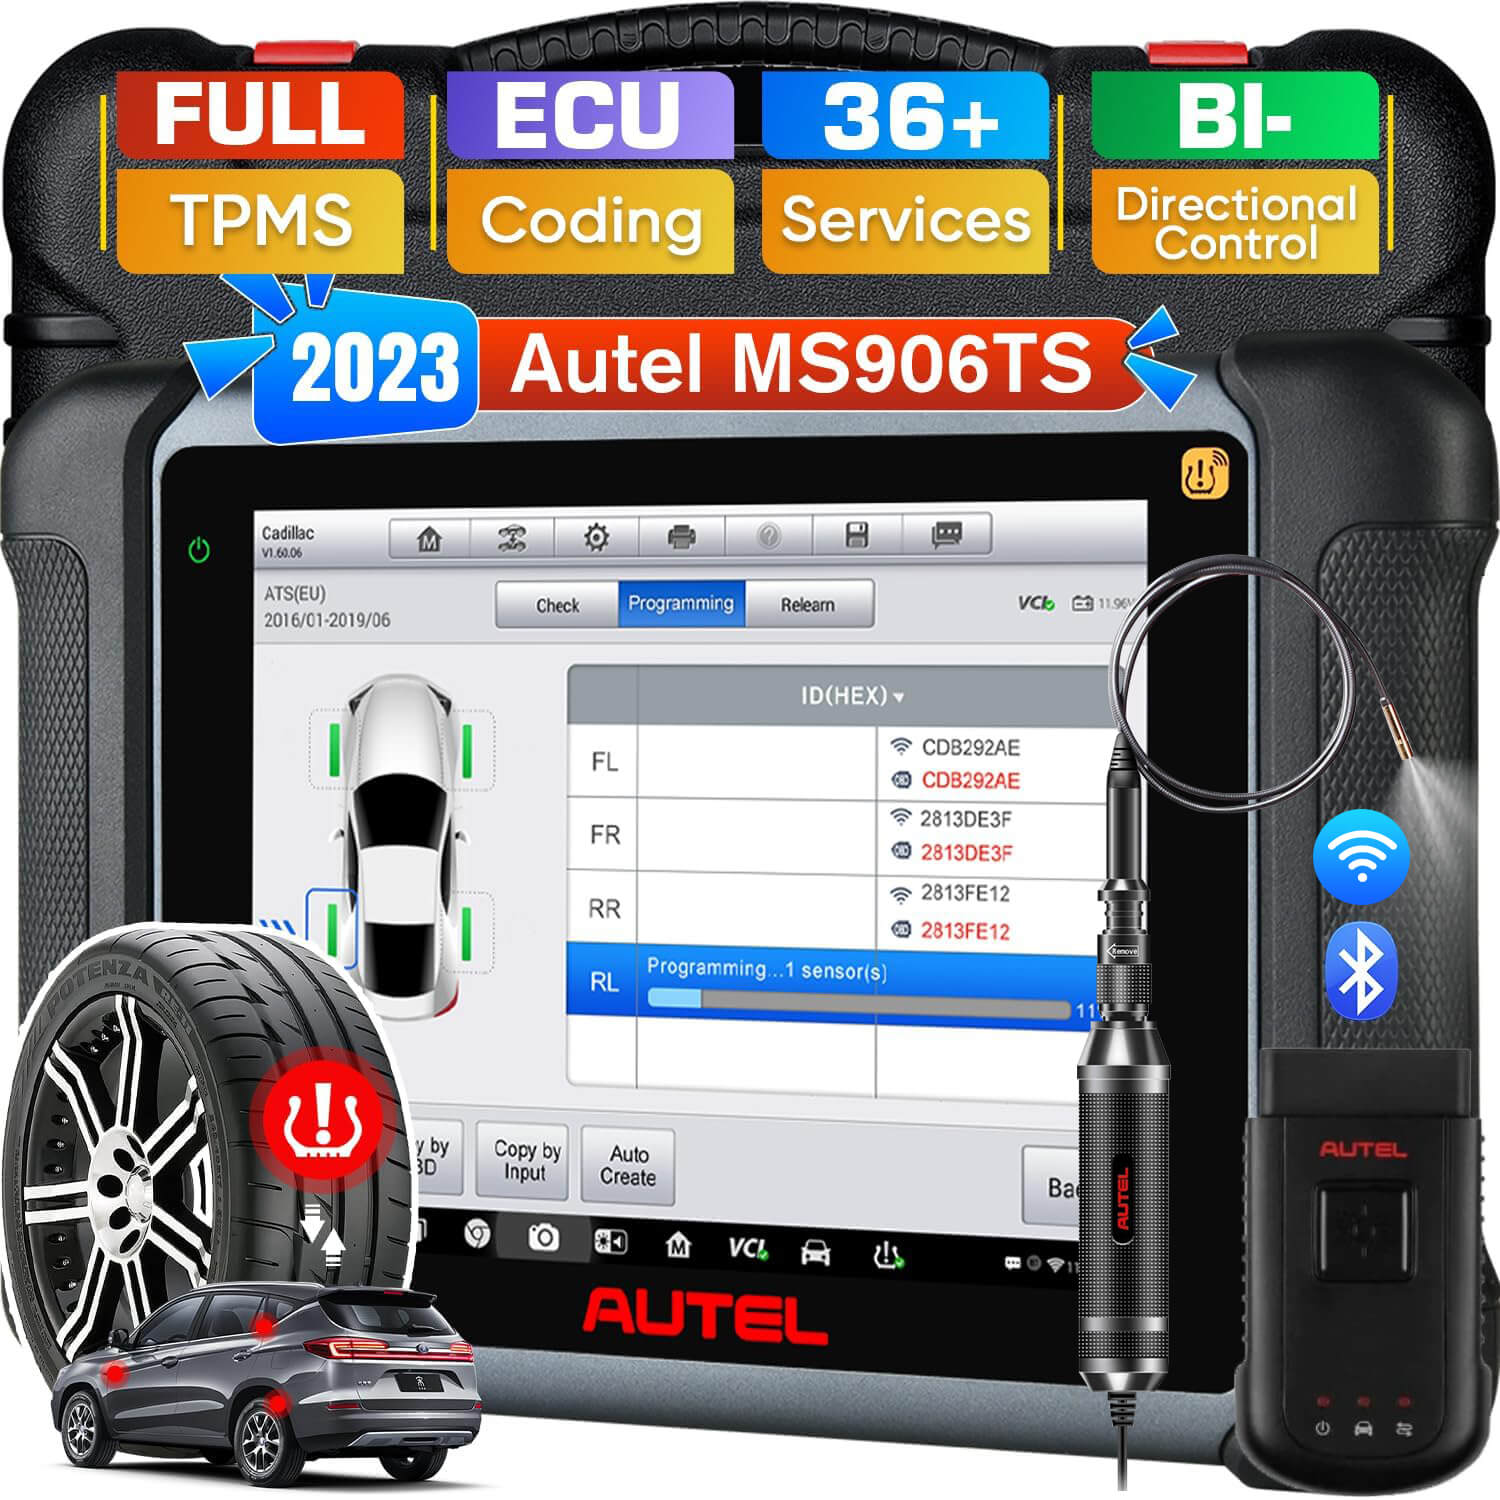 Autel MaxiSys MS906 Pro-TS: 2023 Top TPMS Programming Relearn Tool, ECU Coding Diagnostic Scanner, Level-up of MS906 Pro MS906TS MS906BT MK908, Bi-dir - 1